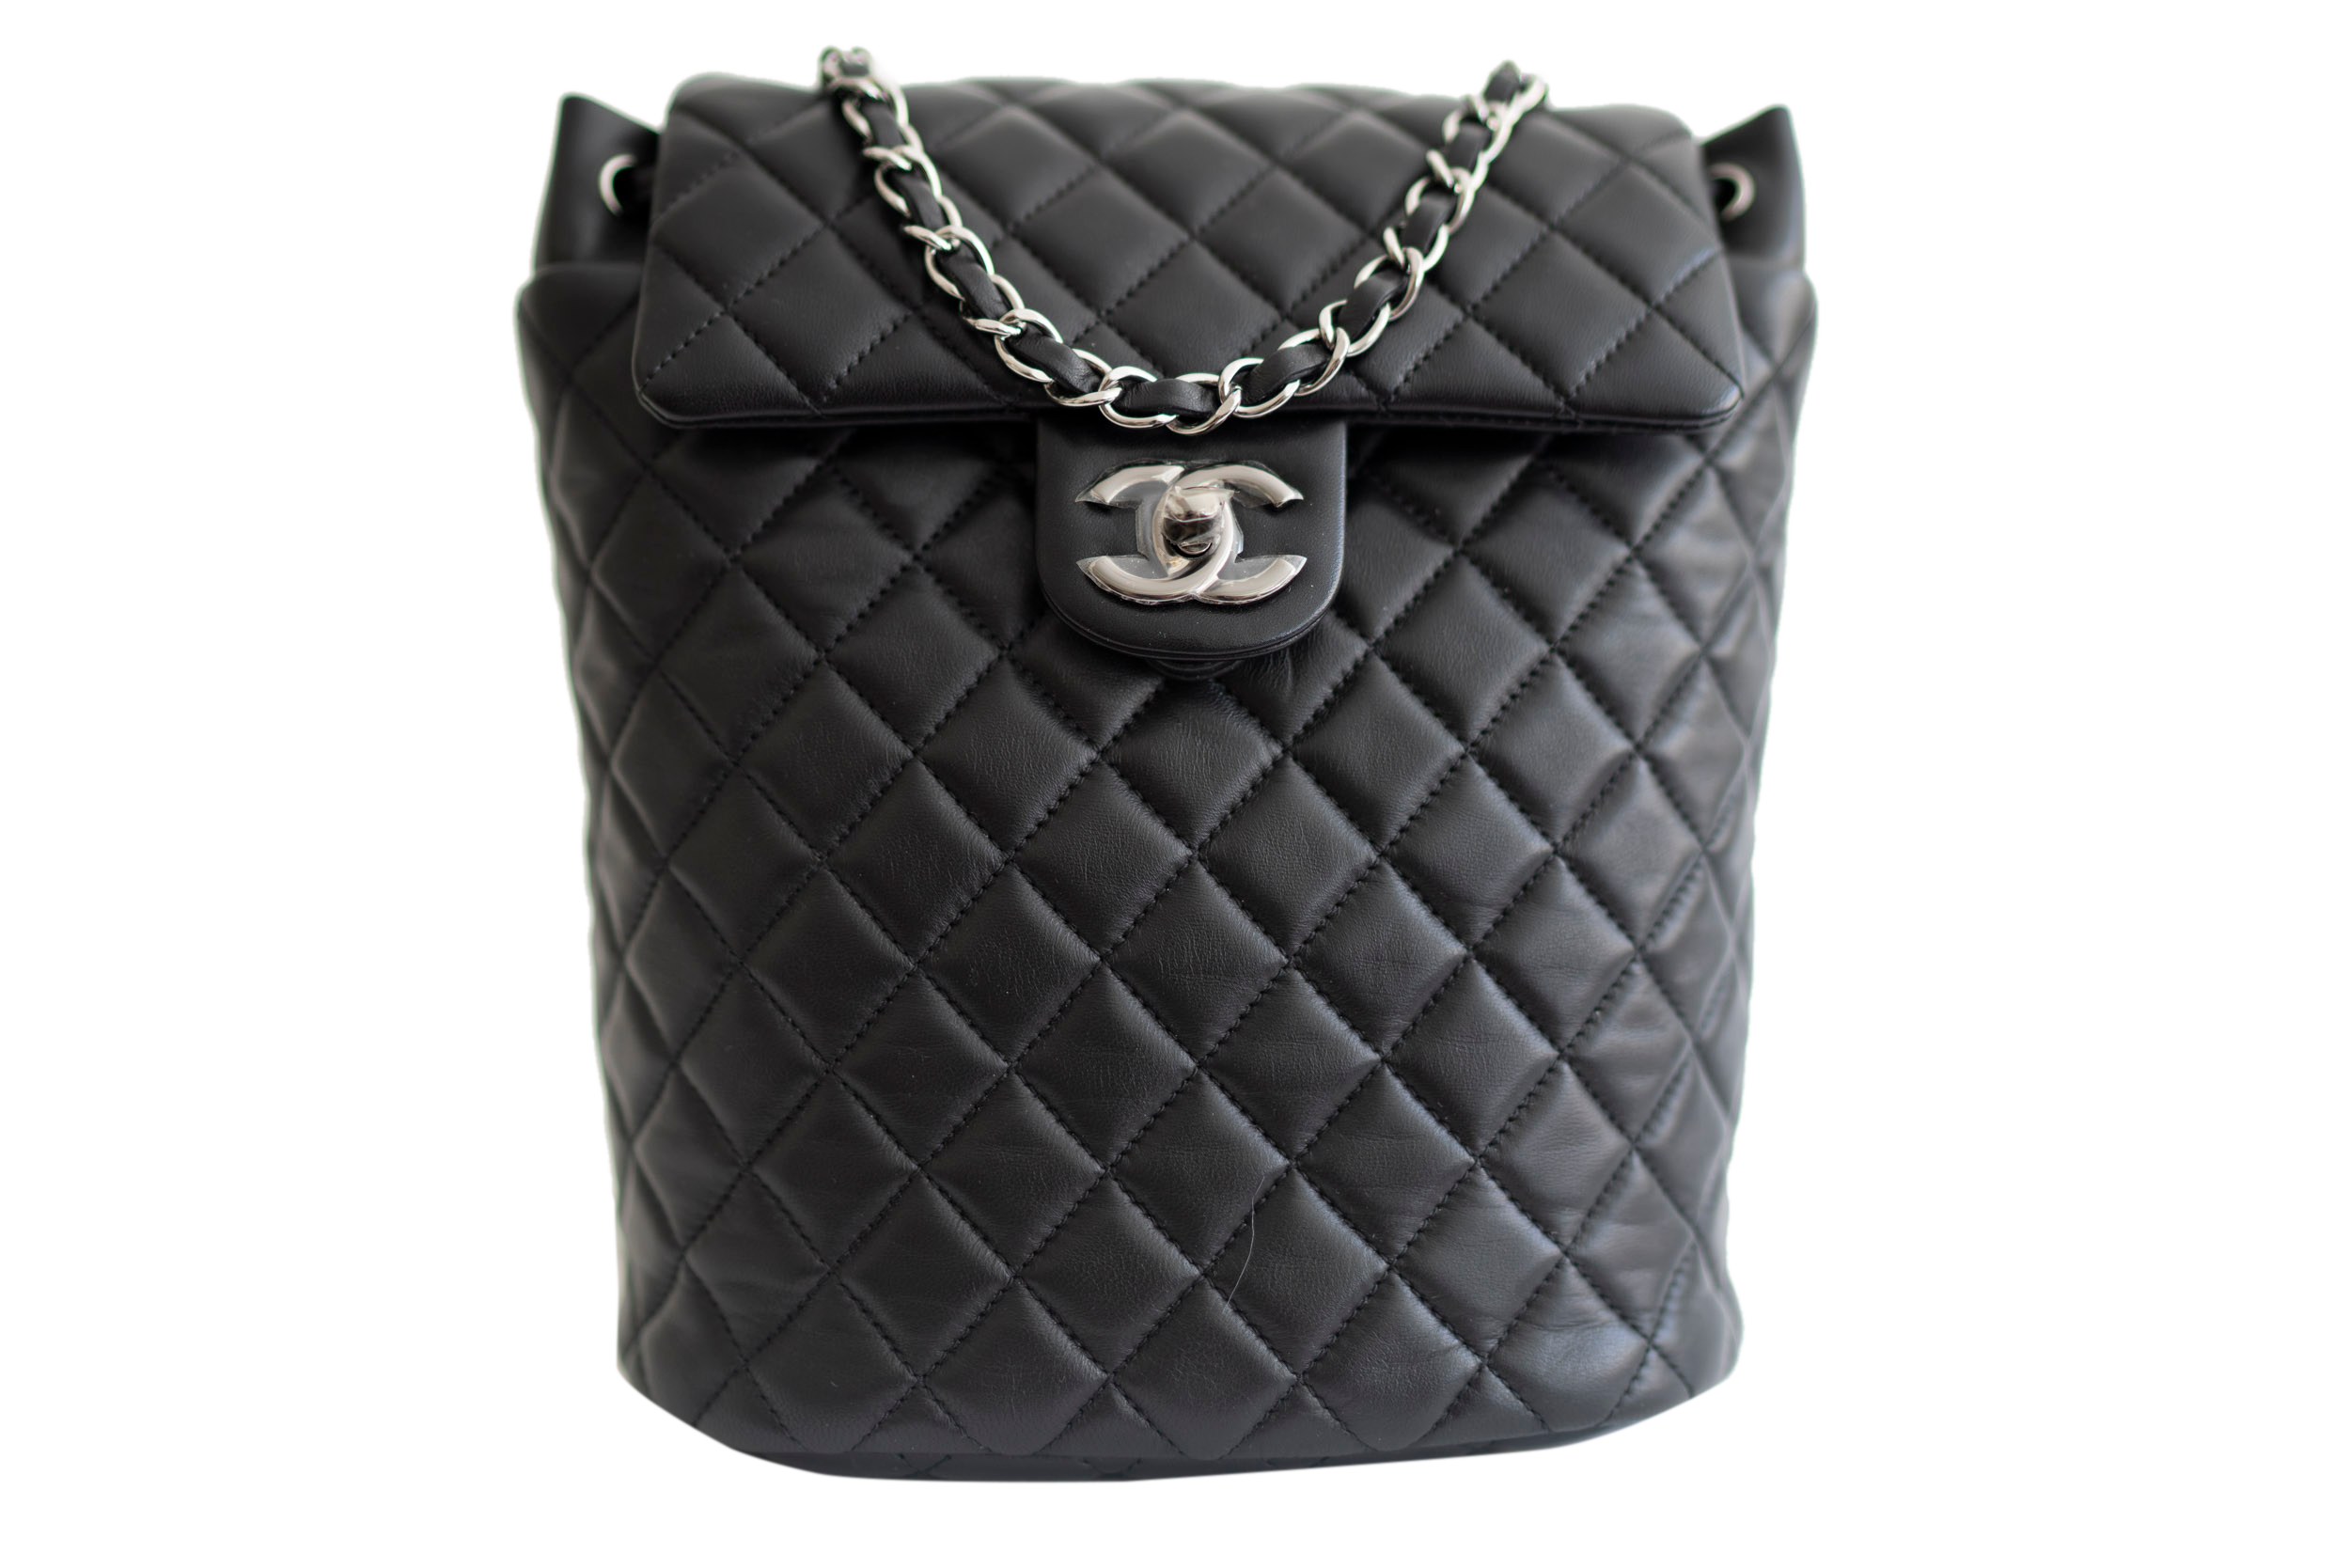 Urban Spirit Small | Chanel Bag at Luxury Fashion Rentals